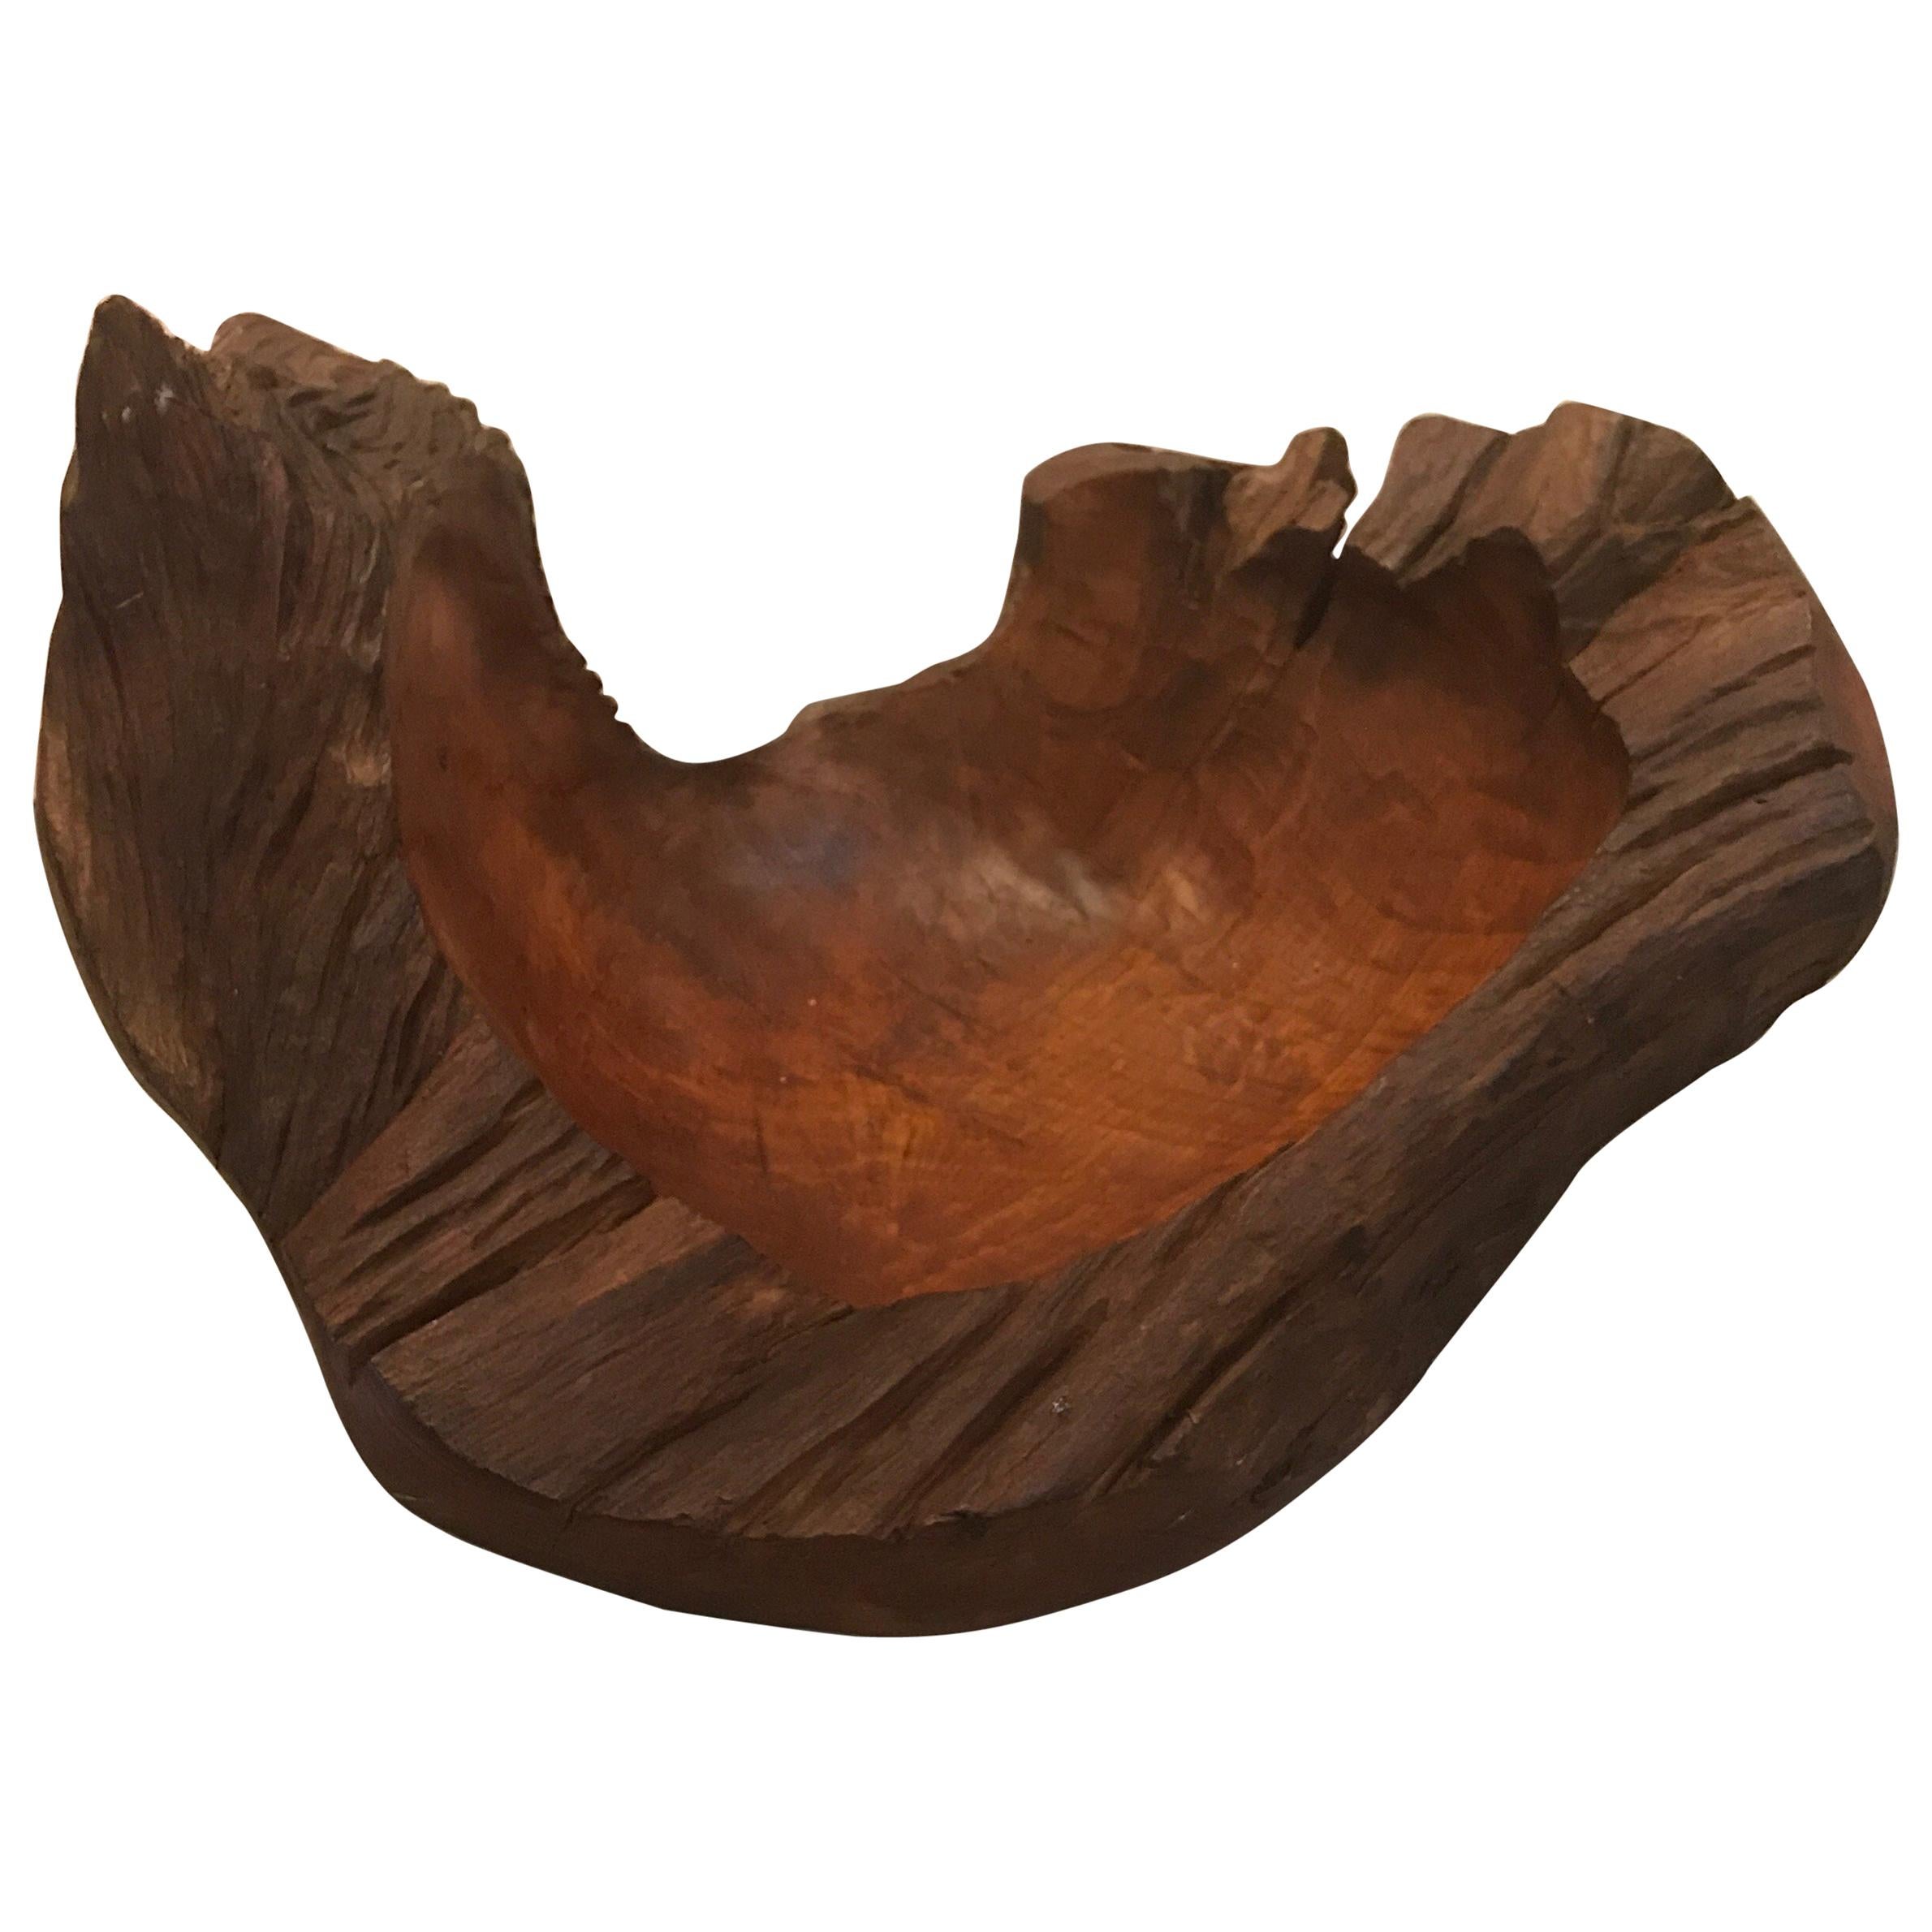 Midcentury American Craft Artisan Hand-Carved Bowl